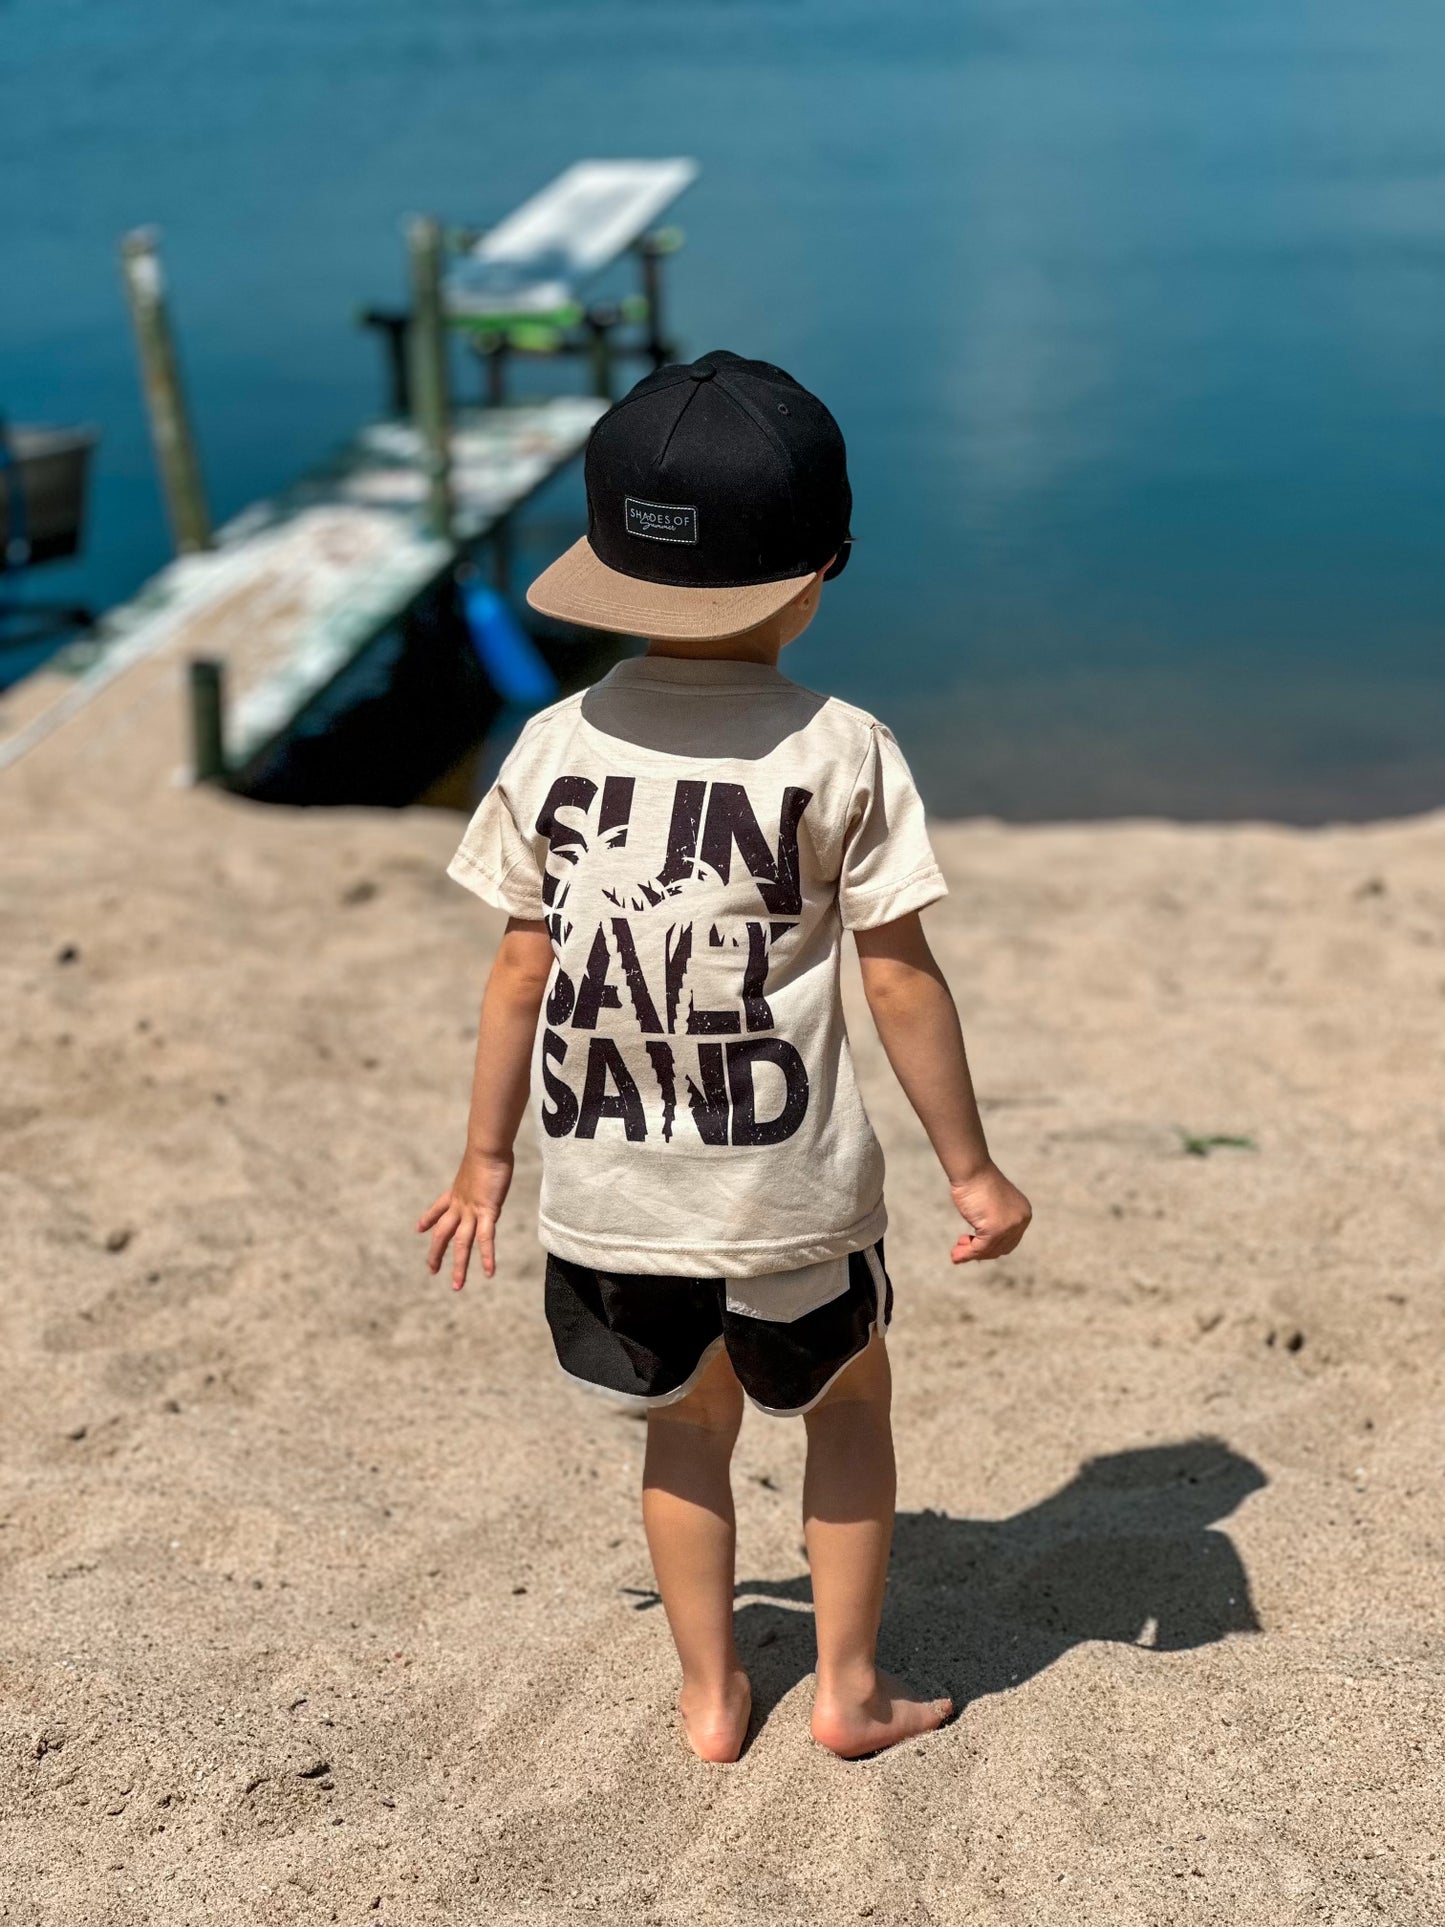 Sun salt sand